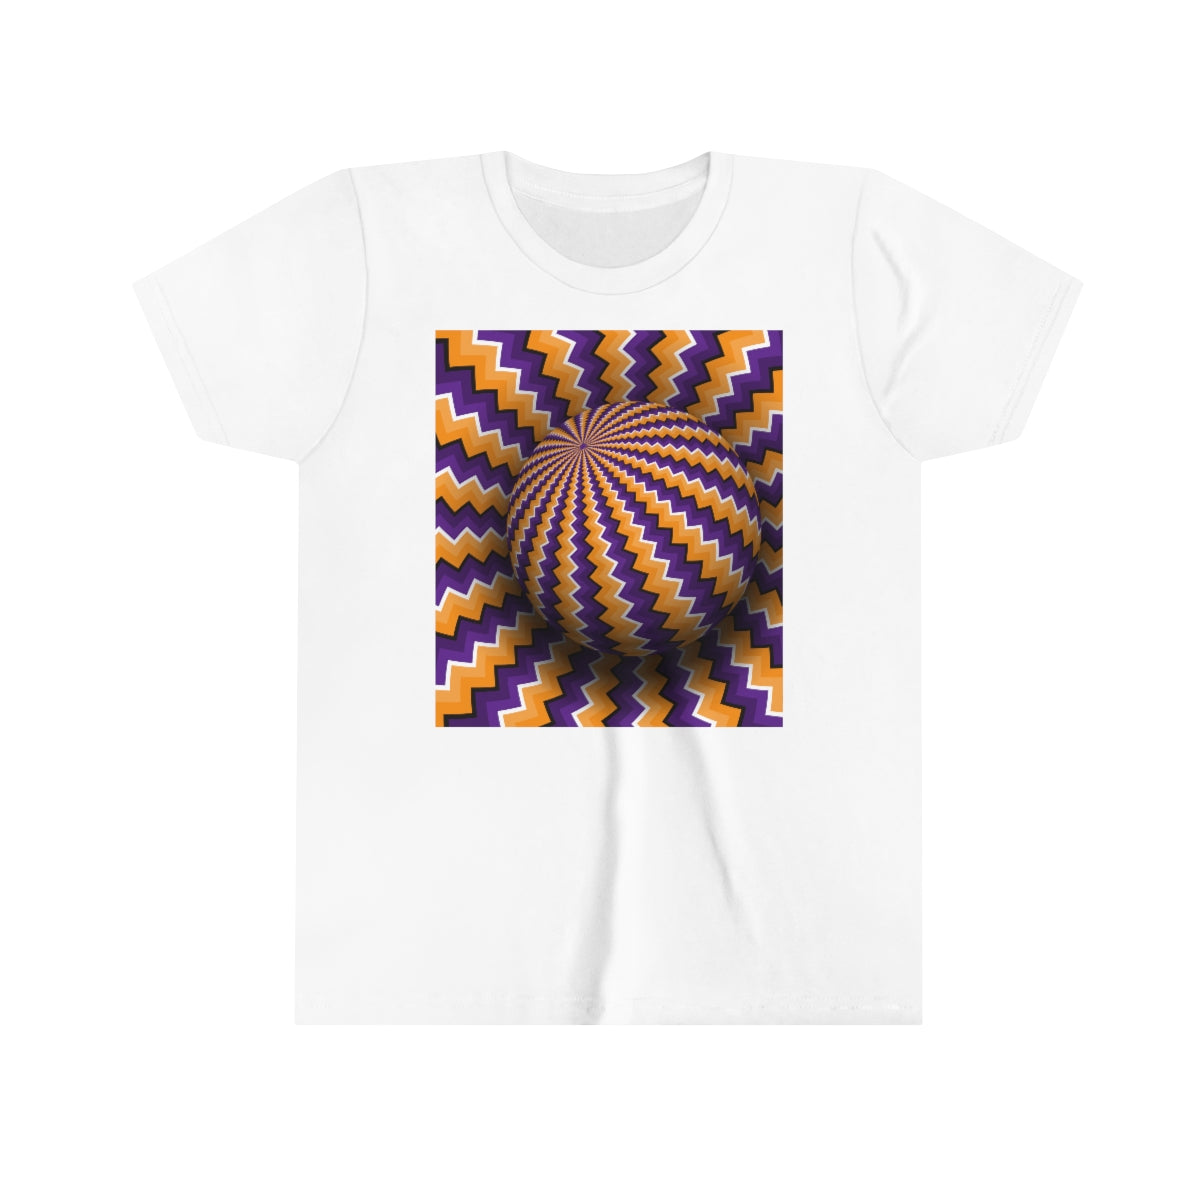 Youth Short Sleeve Tee "Optical illusion Purple sphere"